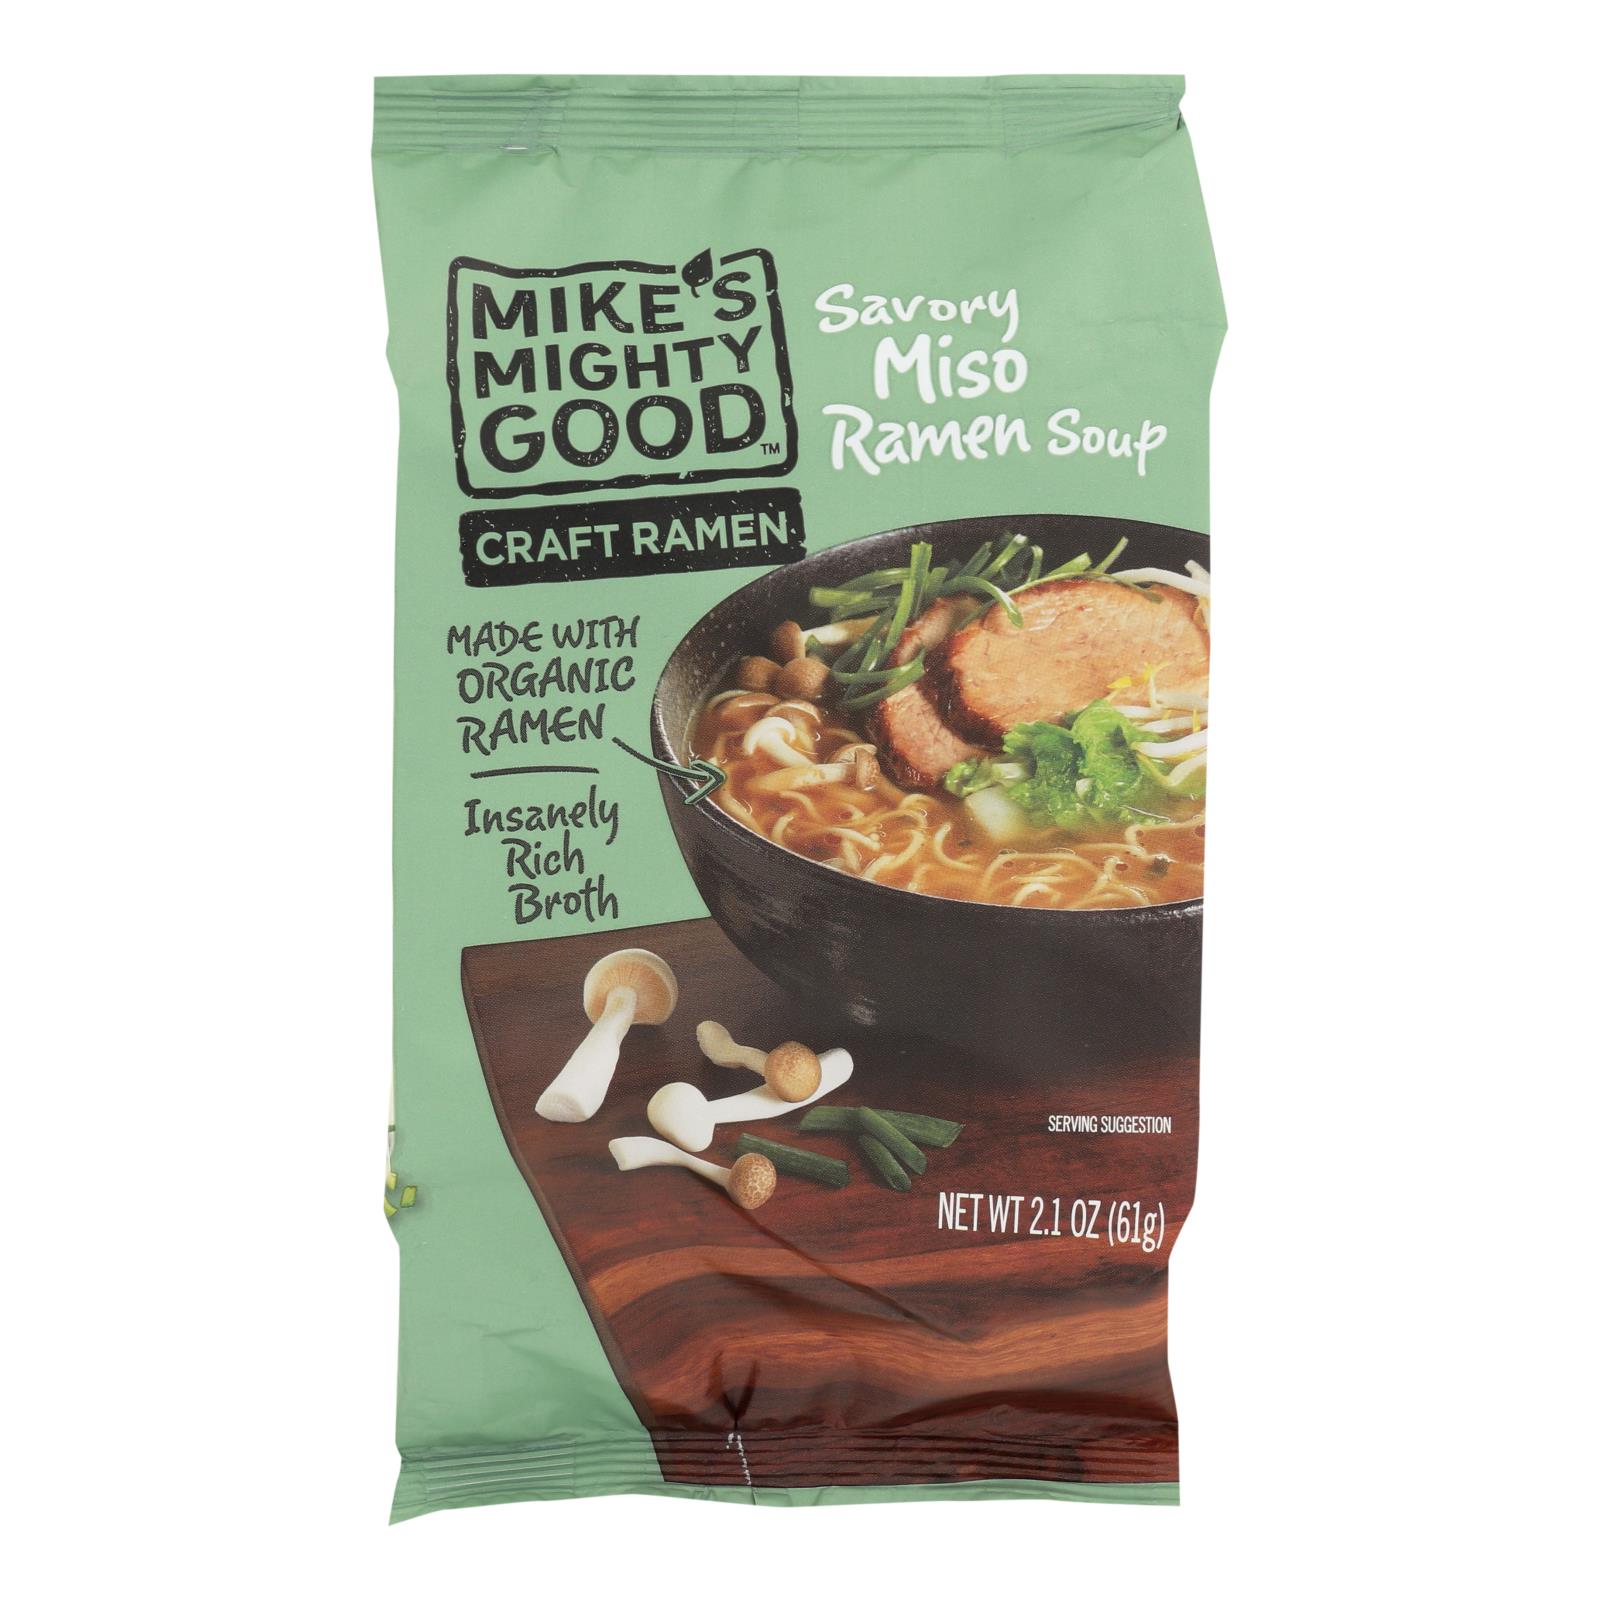 Mike's Mighty Good Savory Miso Ramen Soup - 7개 묶음상품 - 2.1 OZ